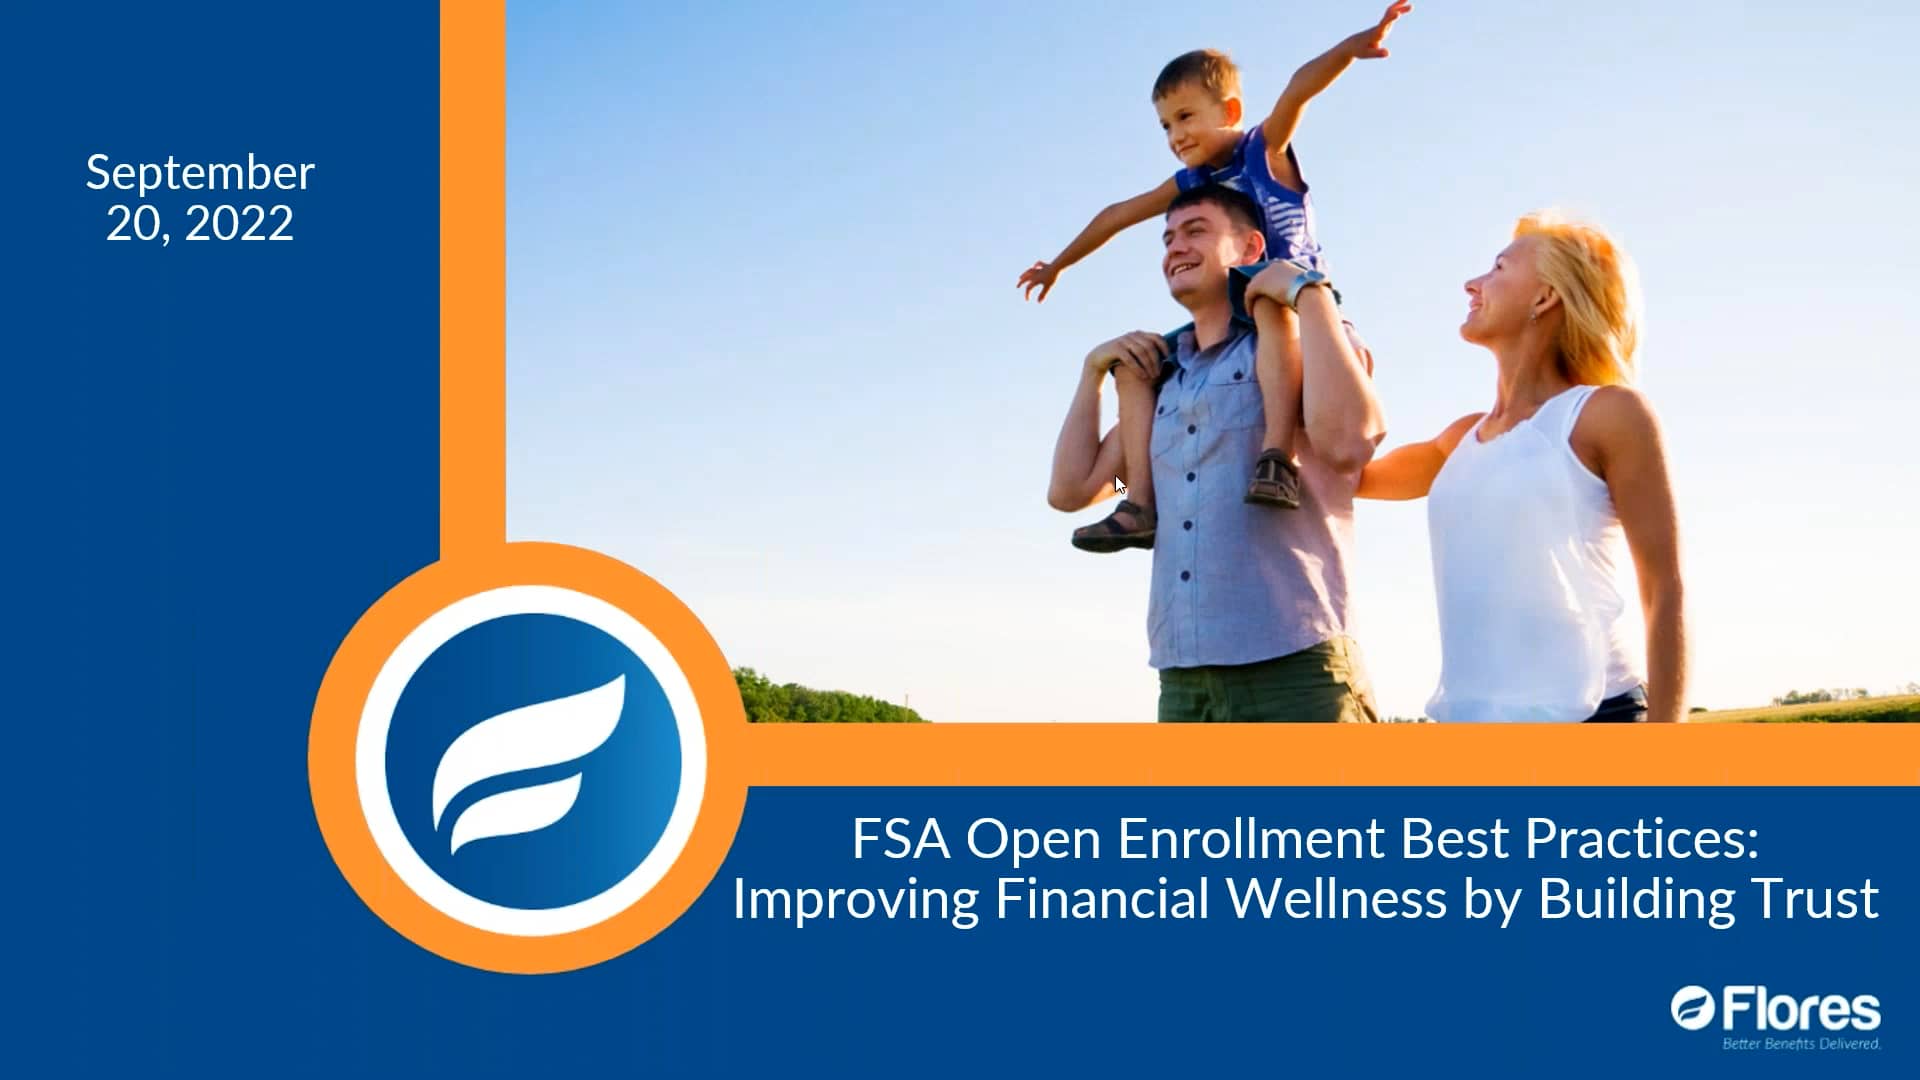 FSA Open Enrollment Best Practices Improving Financial Wellness by